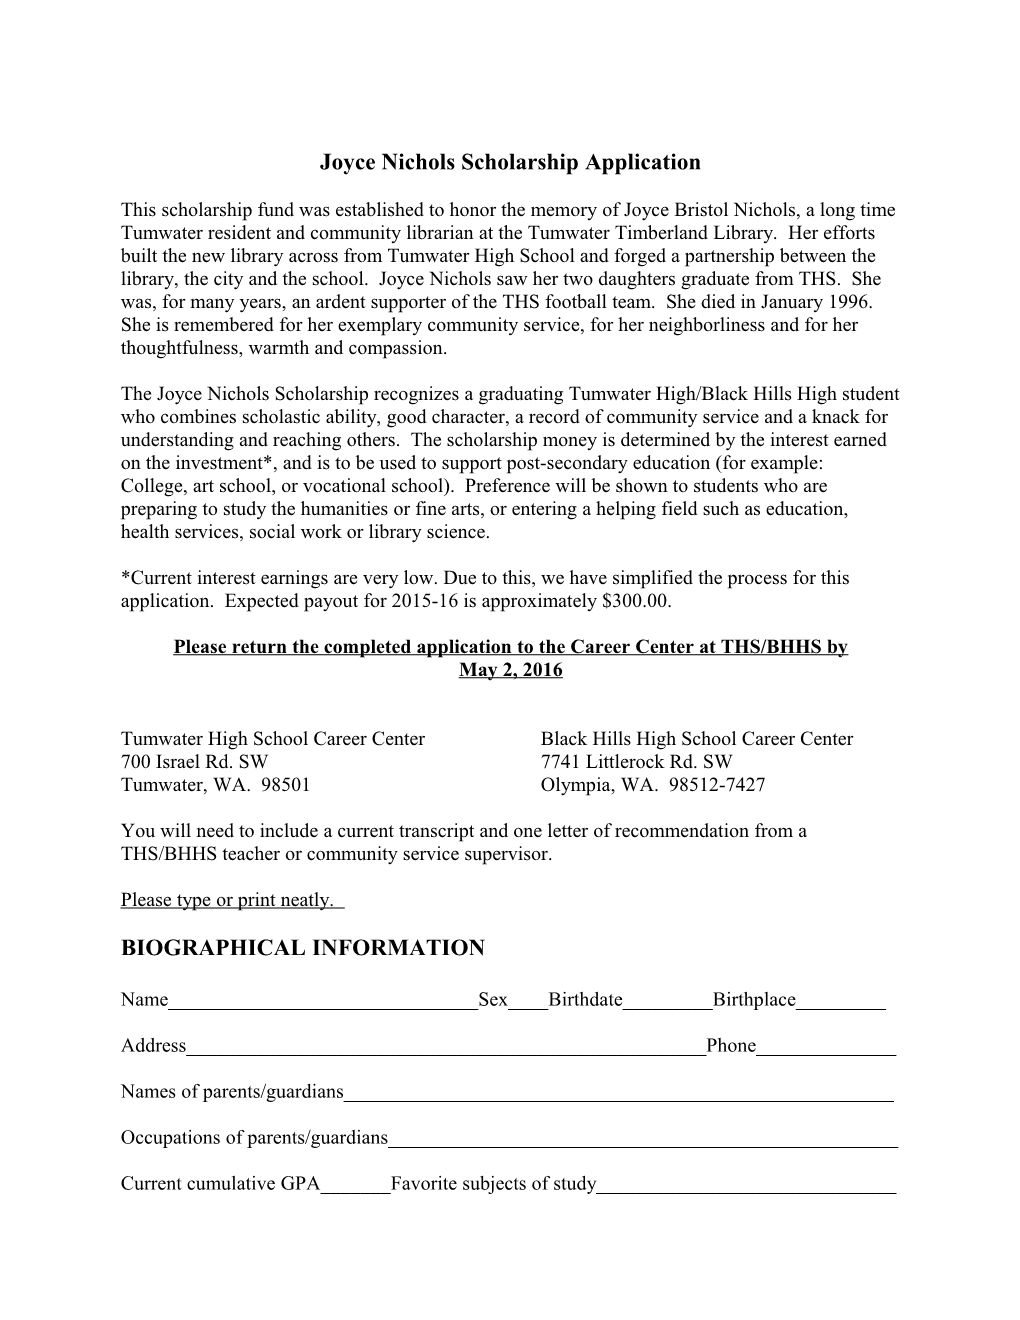 Joyce Nichols Scholarship Application